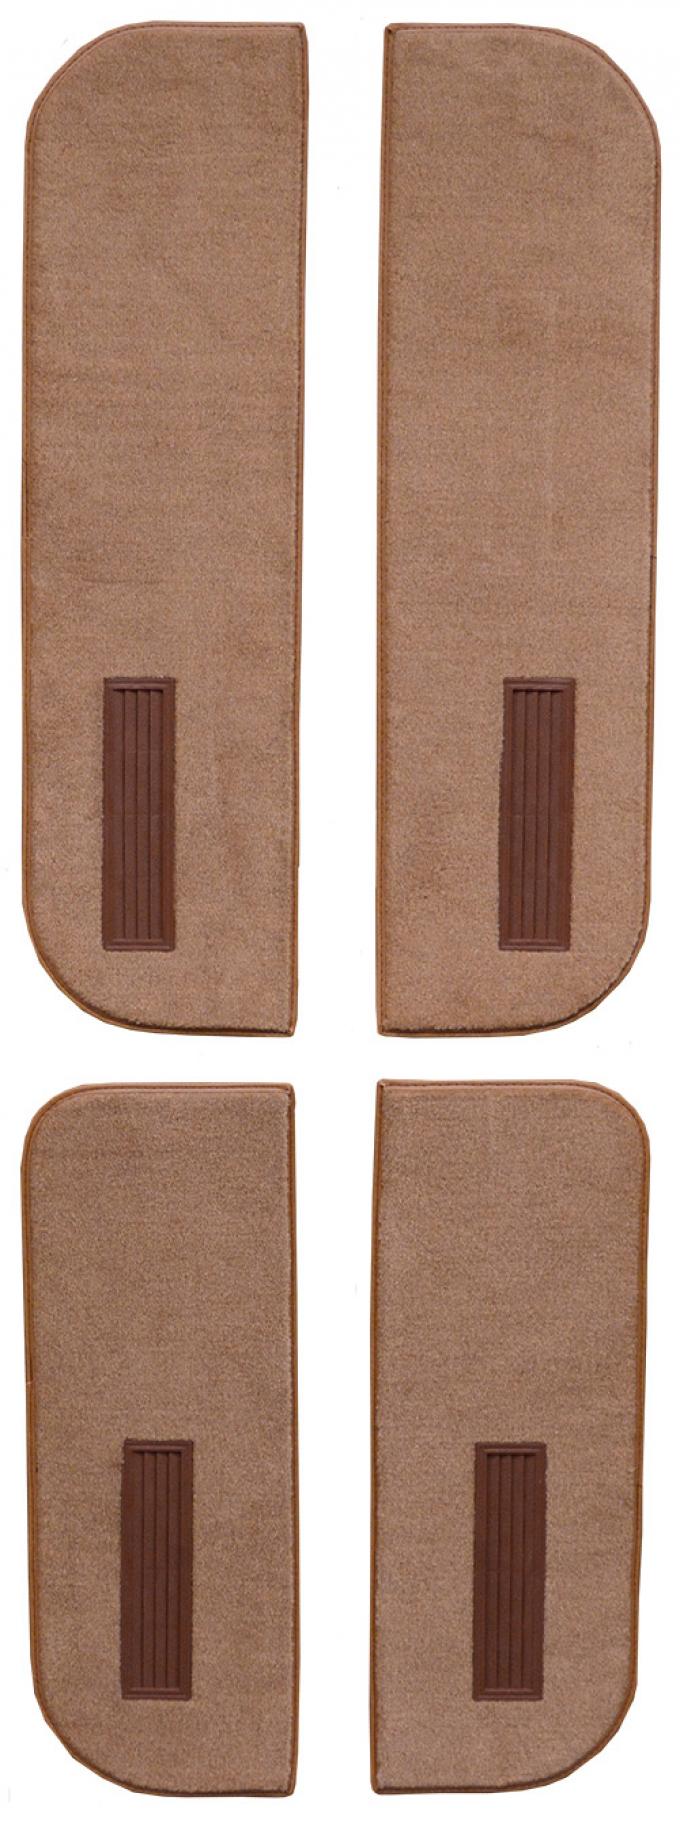 ACC 1975-1978 GMC K15 Suburban Door Panel Inserts on Cardboard w/Vents 4pc Cutpile Carpet